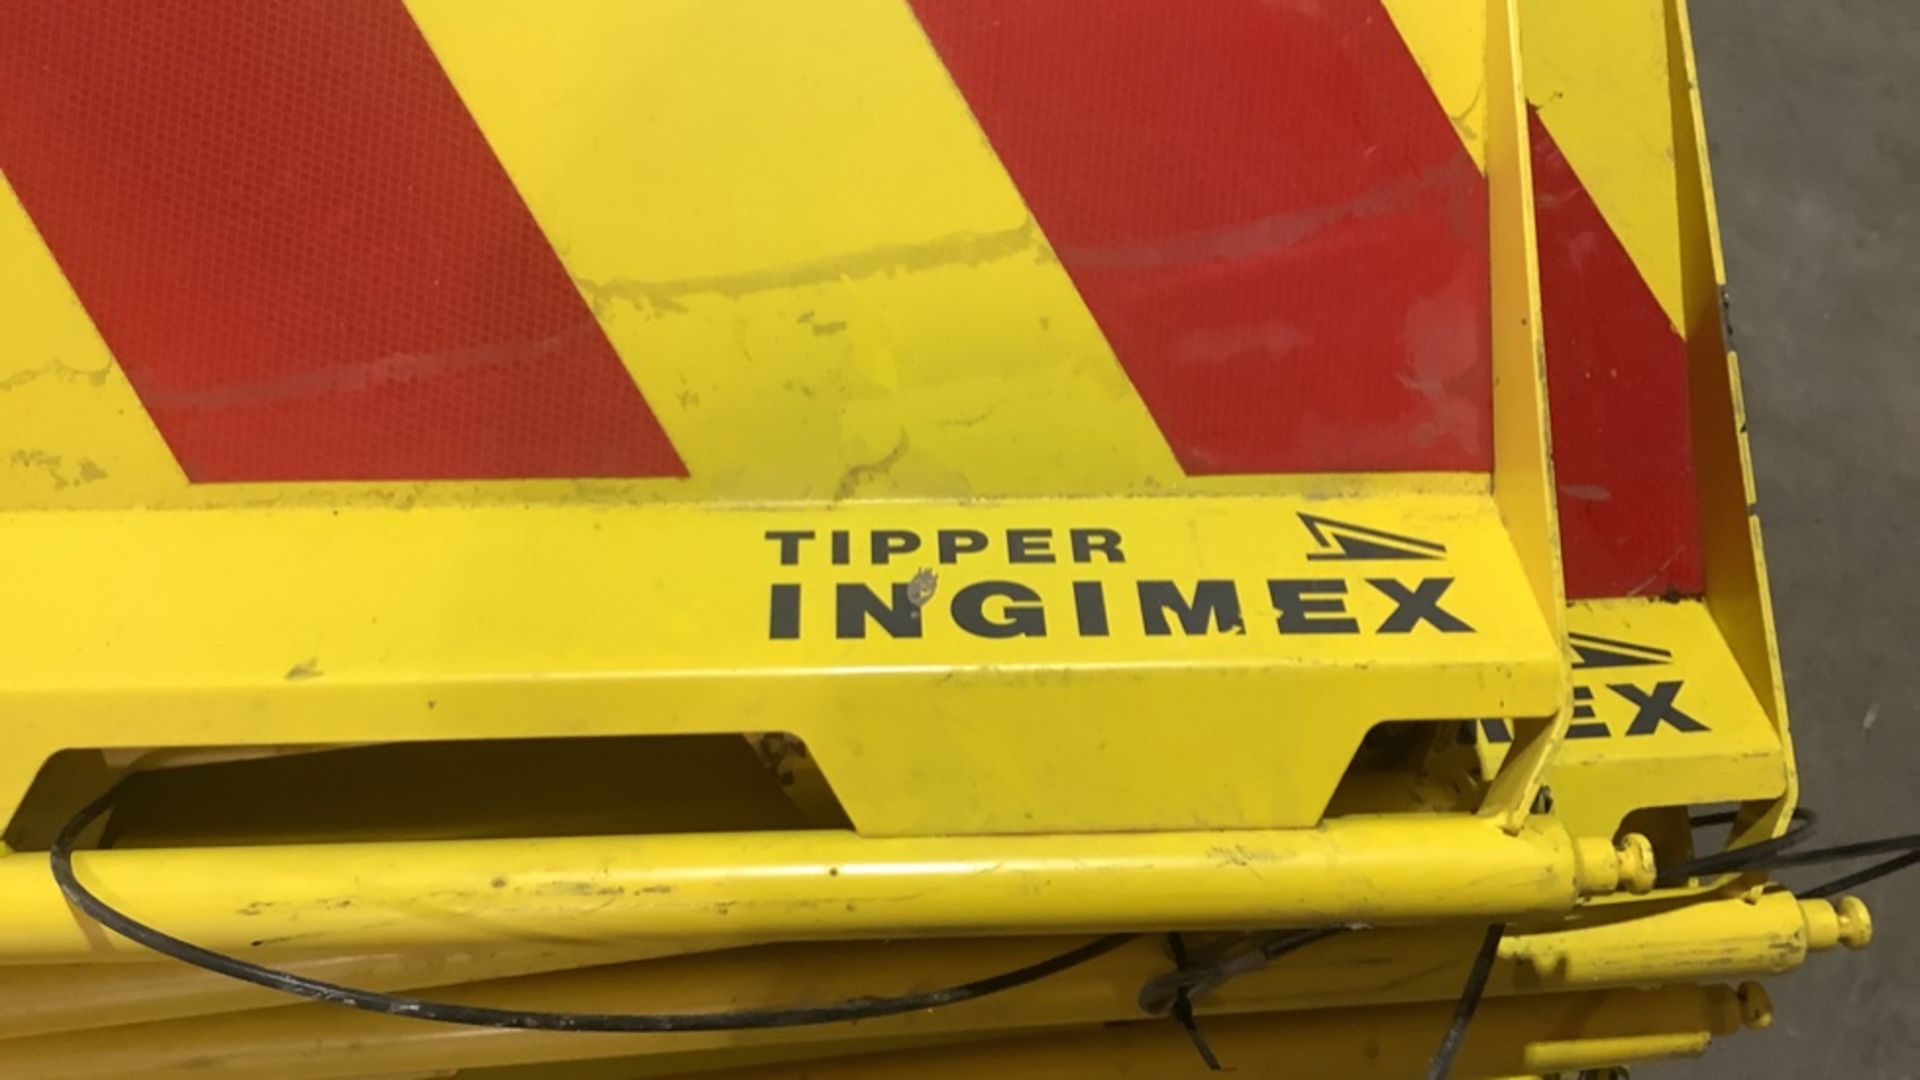 INGIMEX TIPPER TAILGATES - Image 6 of 7